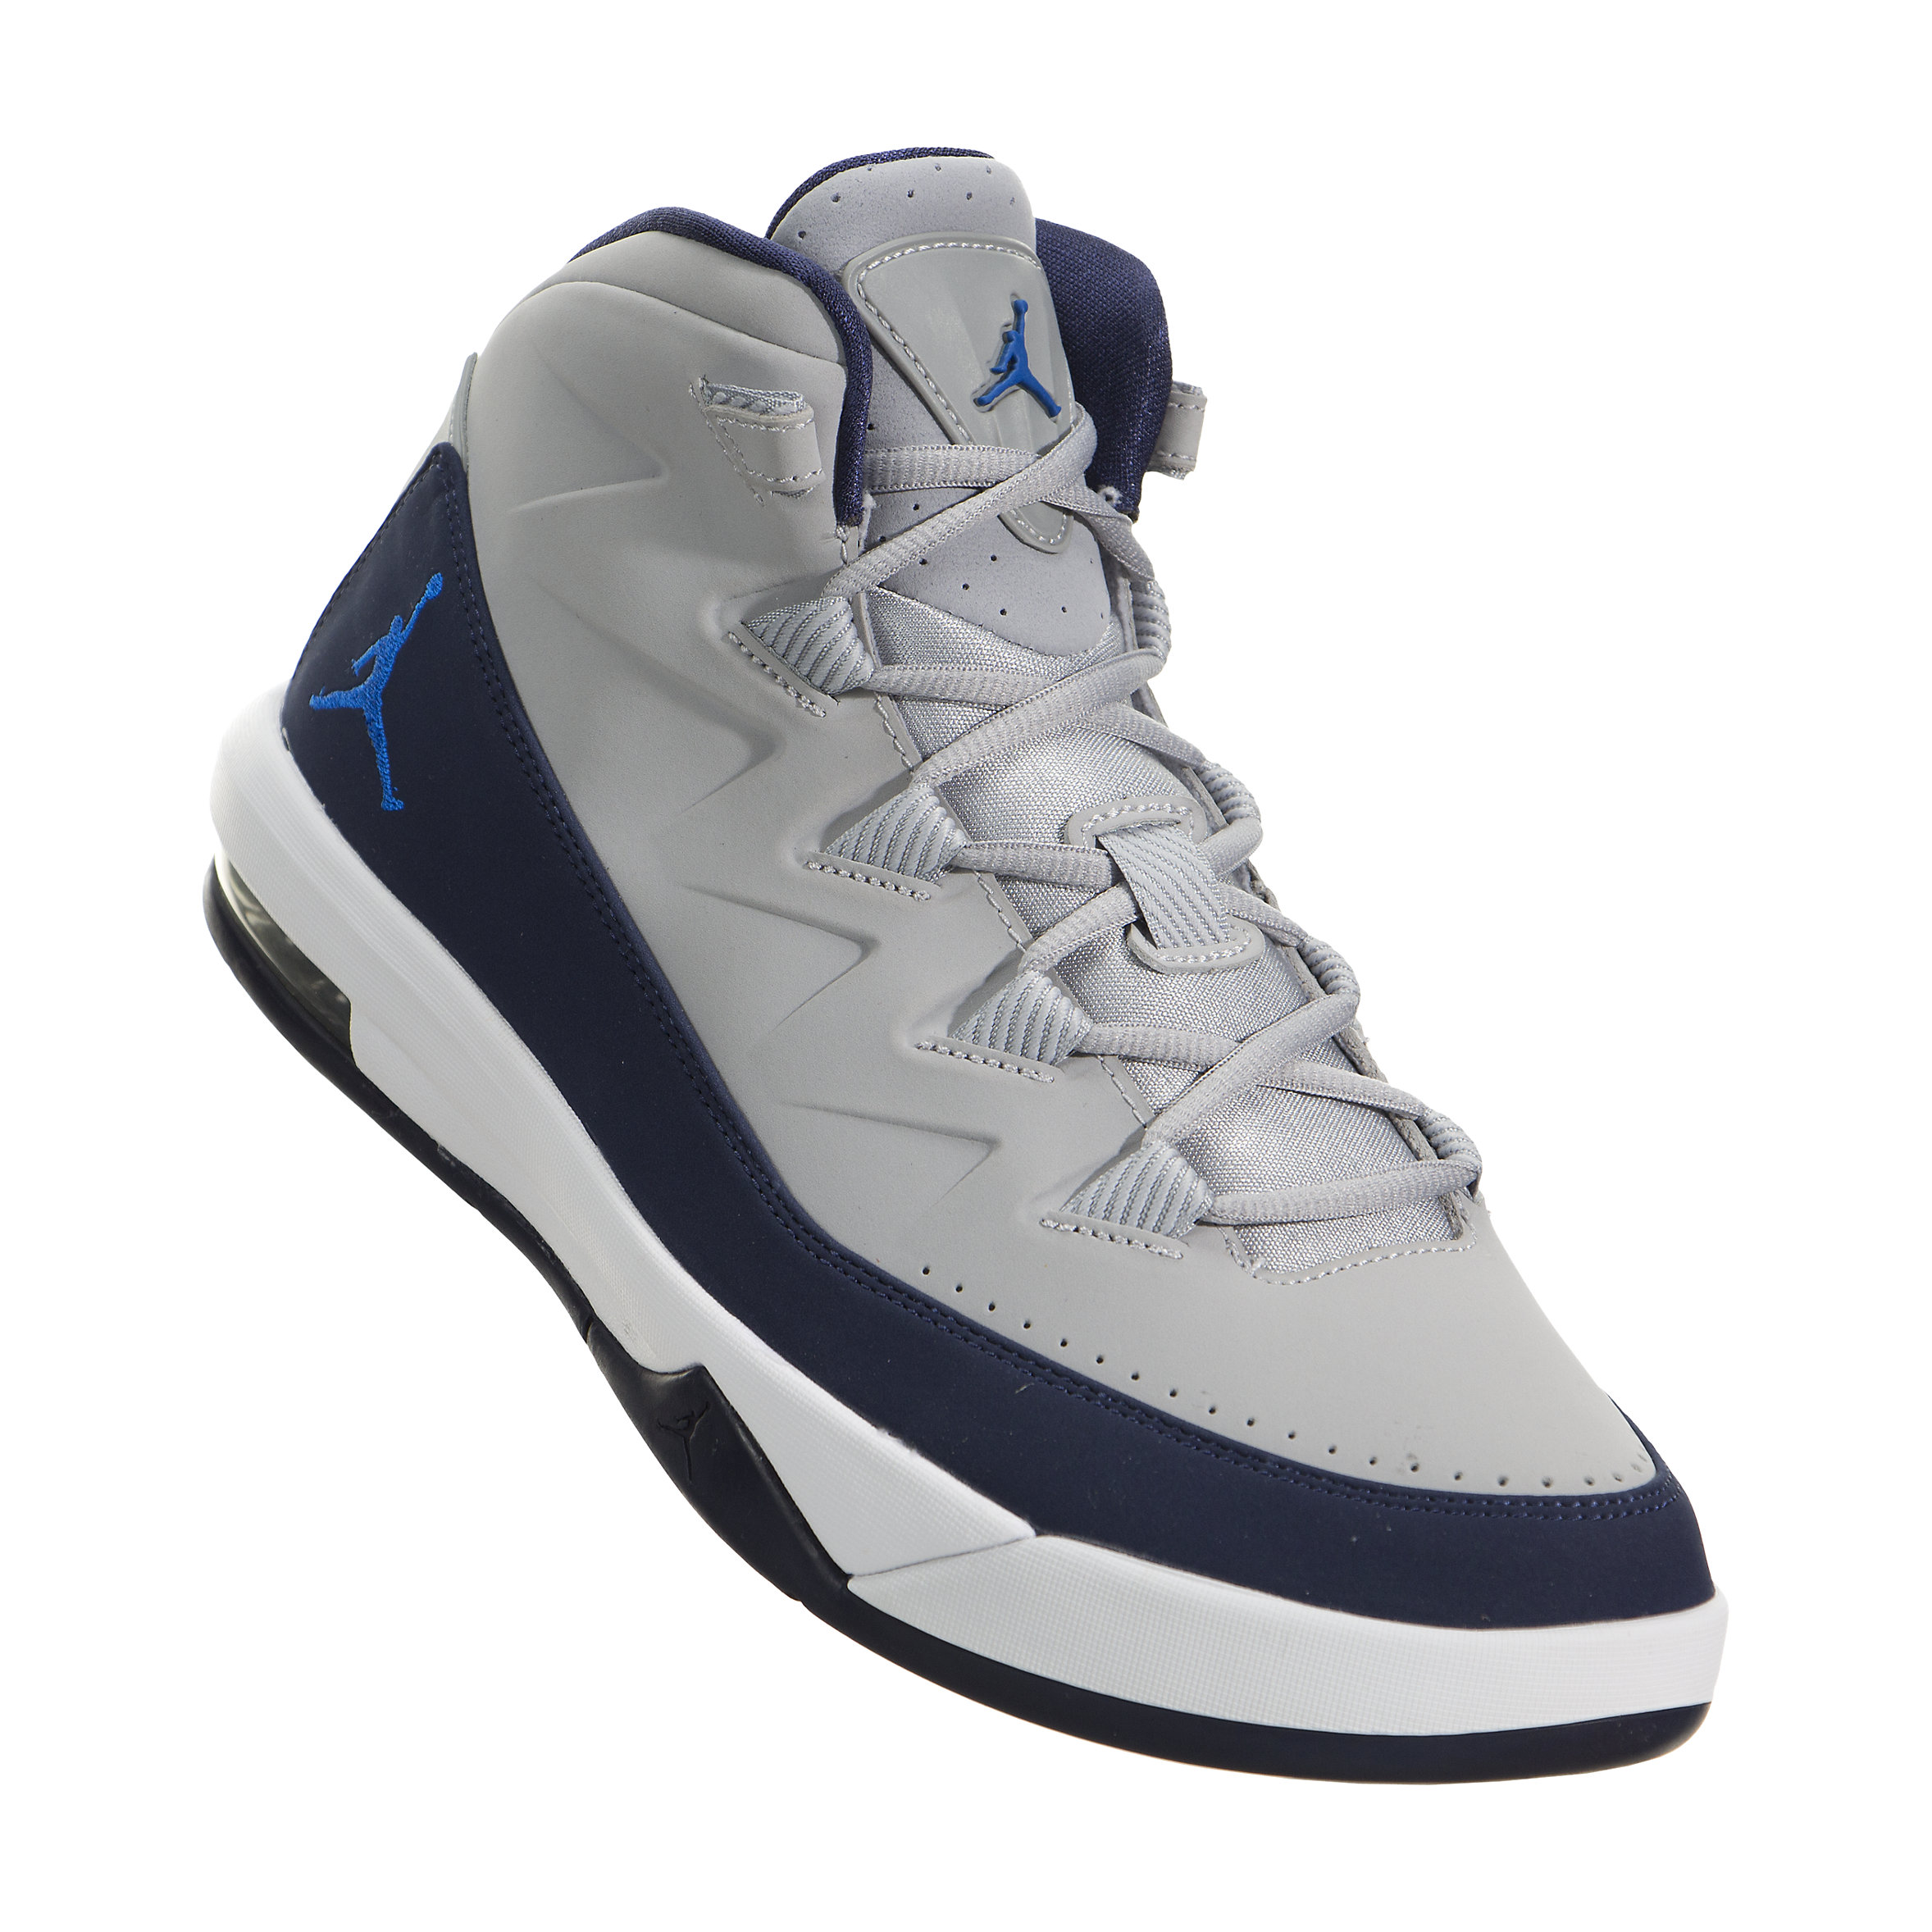 Air Jordan Air Deluxe - $124.99 | Sneakerhead.com - 807717-006